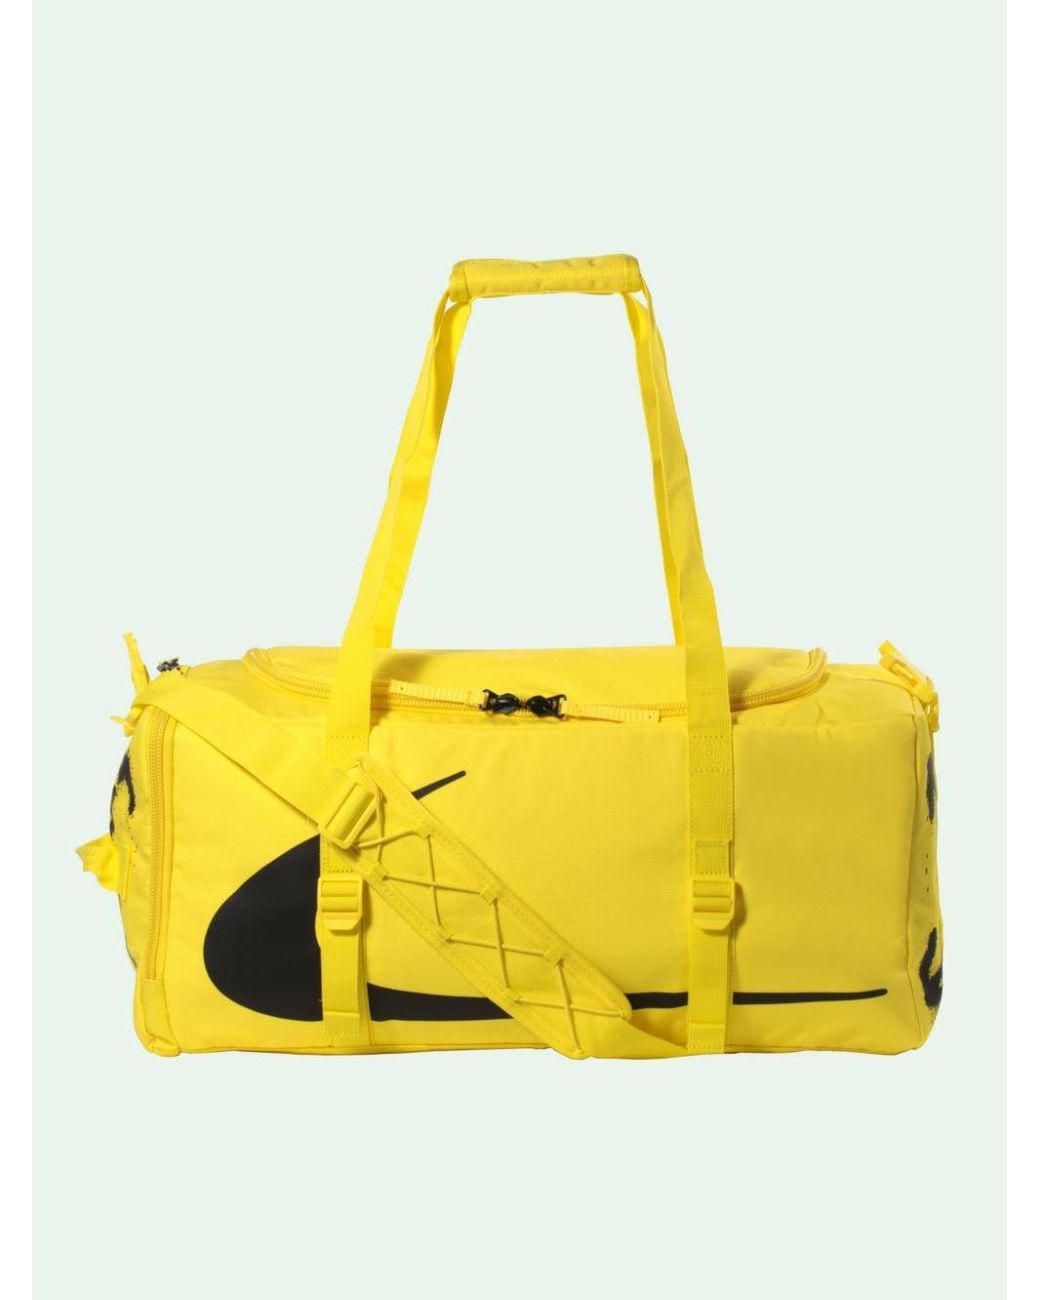 NIKE X OFF-WHITE Yellow Nike Duffle Bag | Lyst